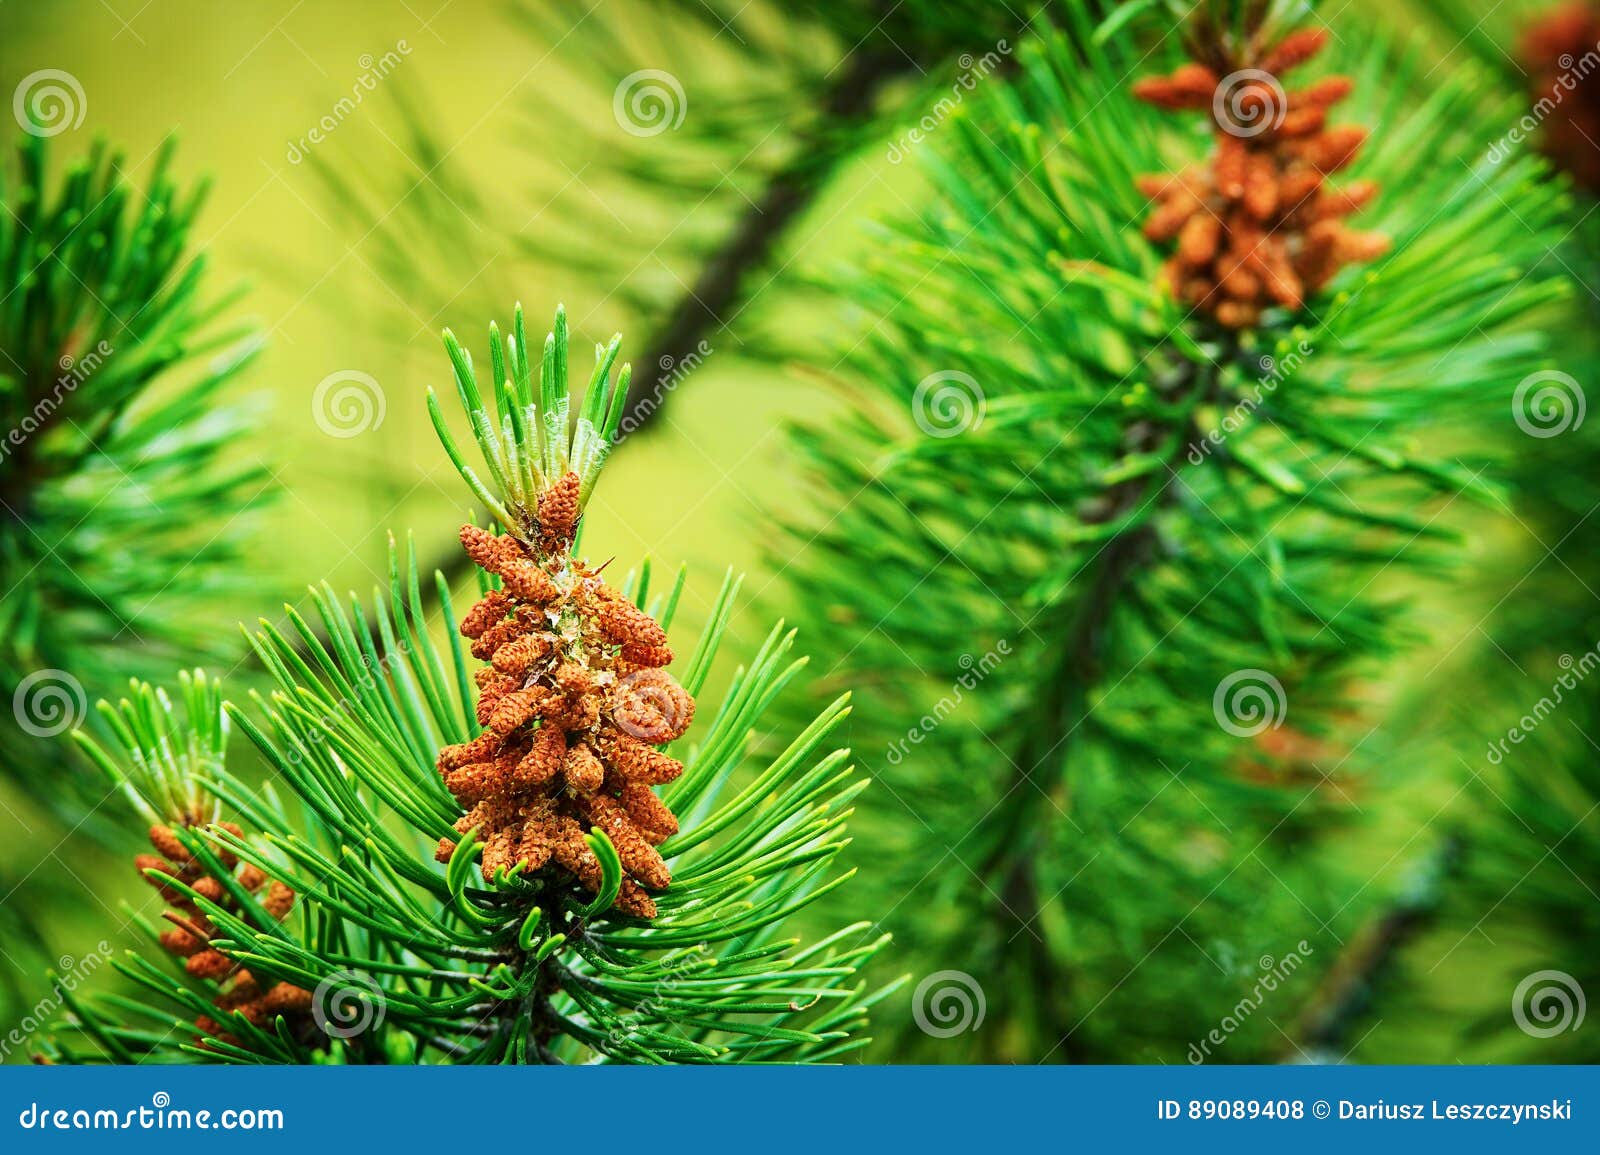 Cosses de pollen de pin image stock. Image du arbre - 109681835